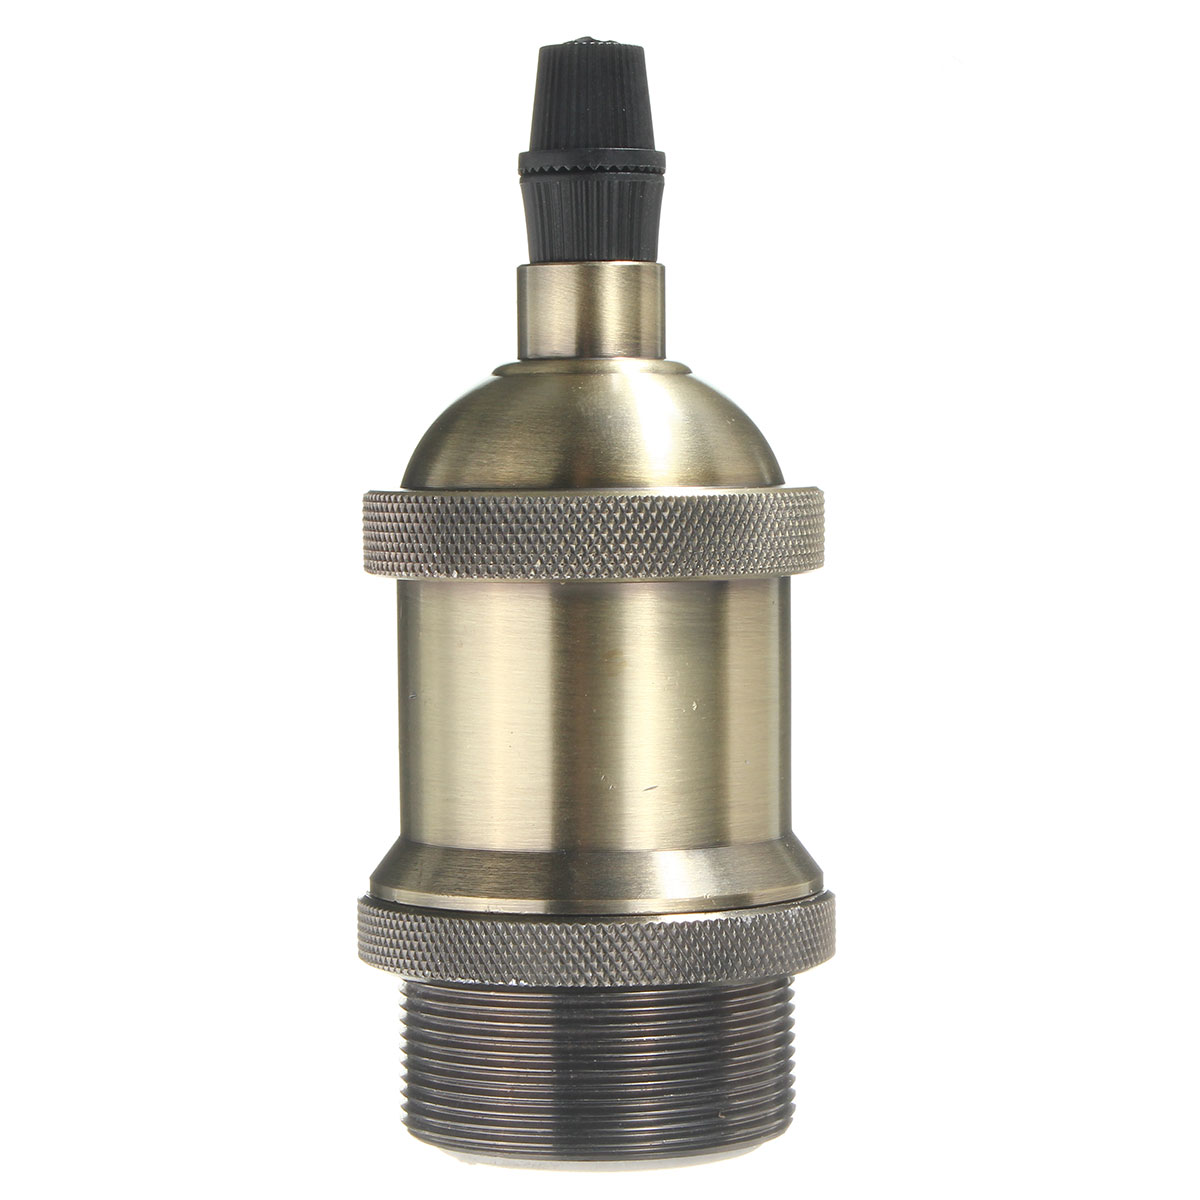 Find 110V 220V E26/E27 Bulb Adapter Copper Light Vintage Holder Retro Lamp Socket for E27 Light Bulb for Sale on Gipsybee.com with cryptocurrencies